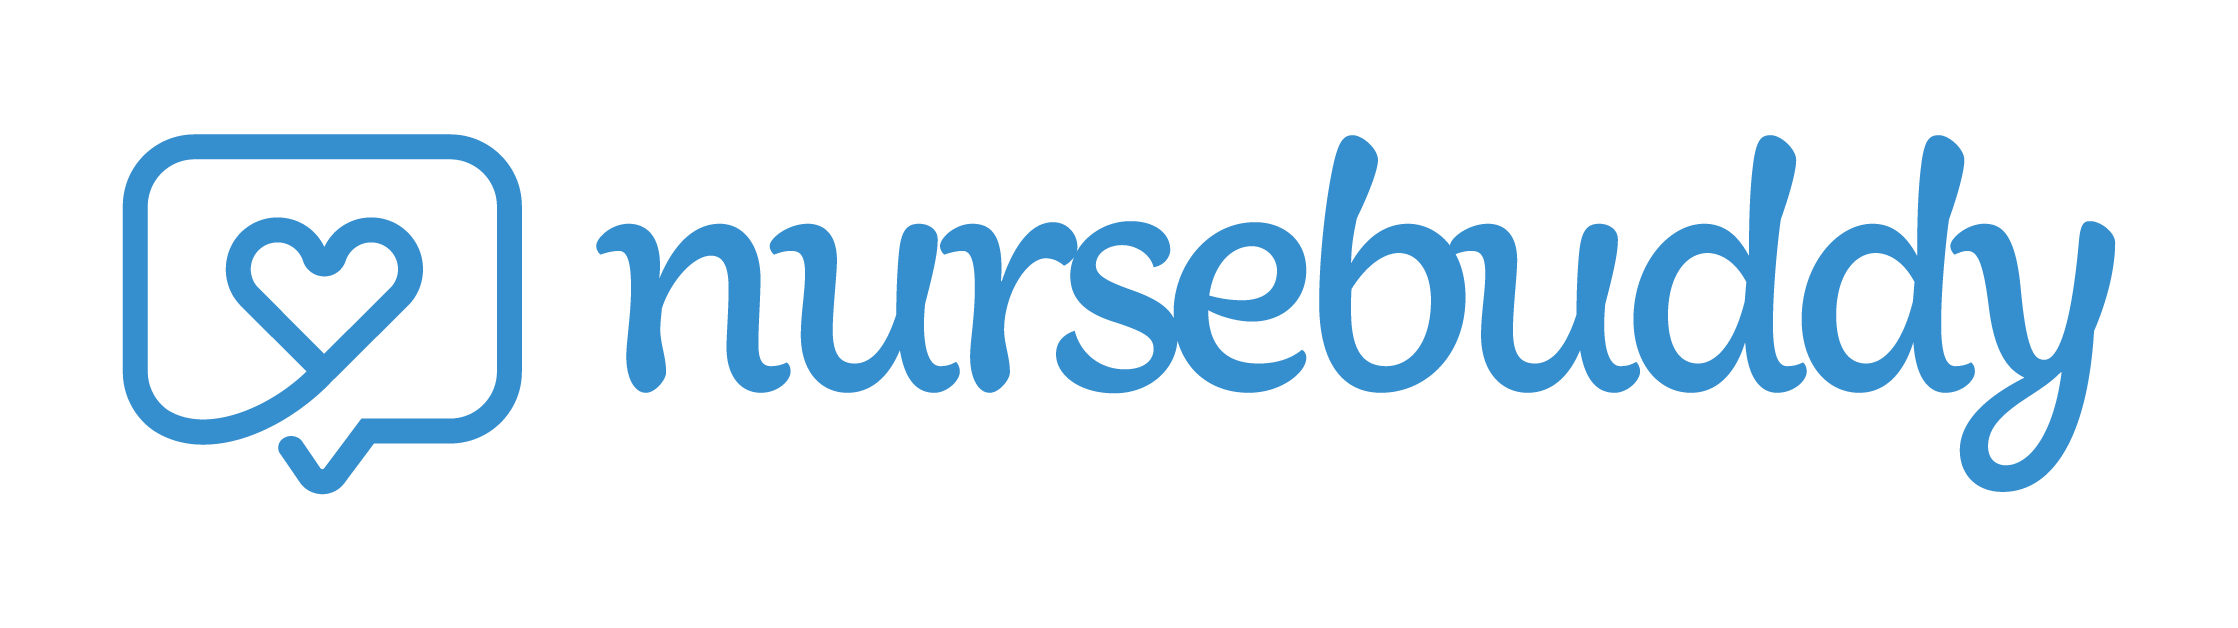 nursebuddy blue logo